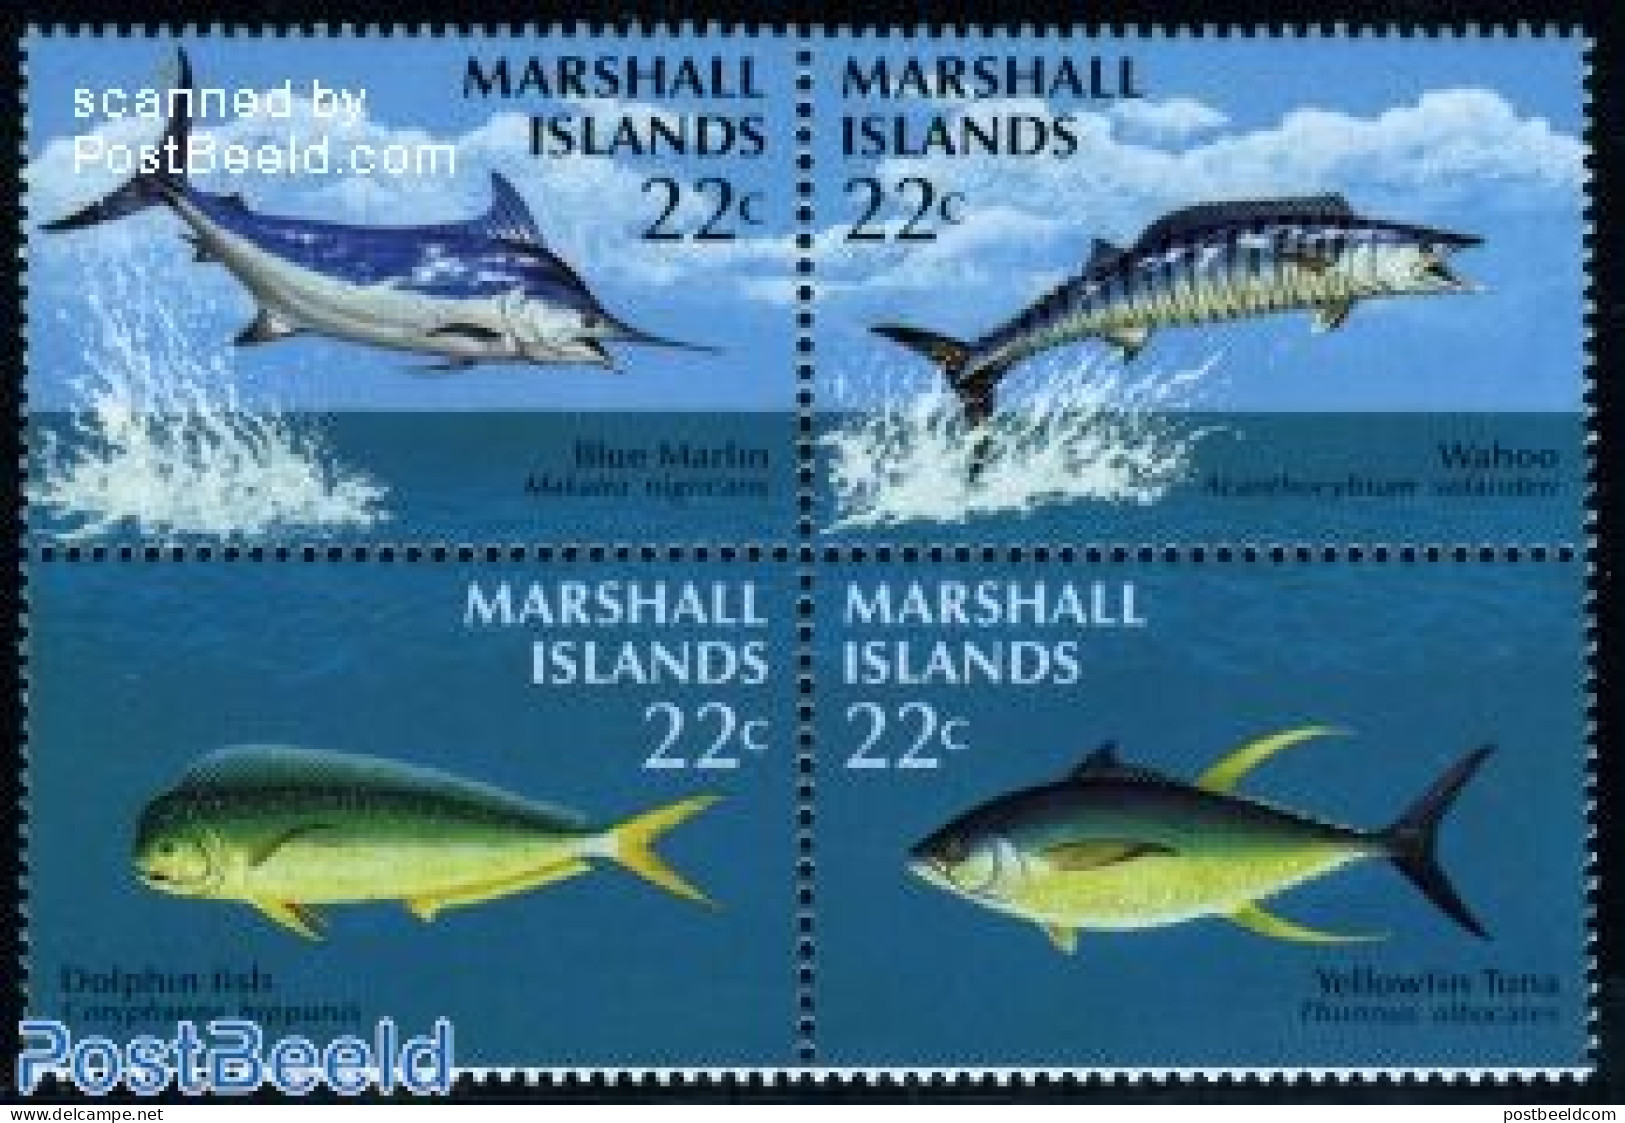 Marshall Islands 1986 Fishing 4v [+], Mint NH, Nature - Fish - Peces